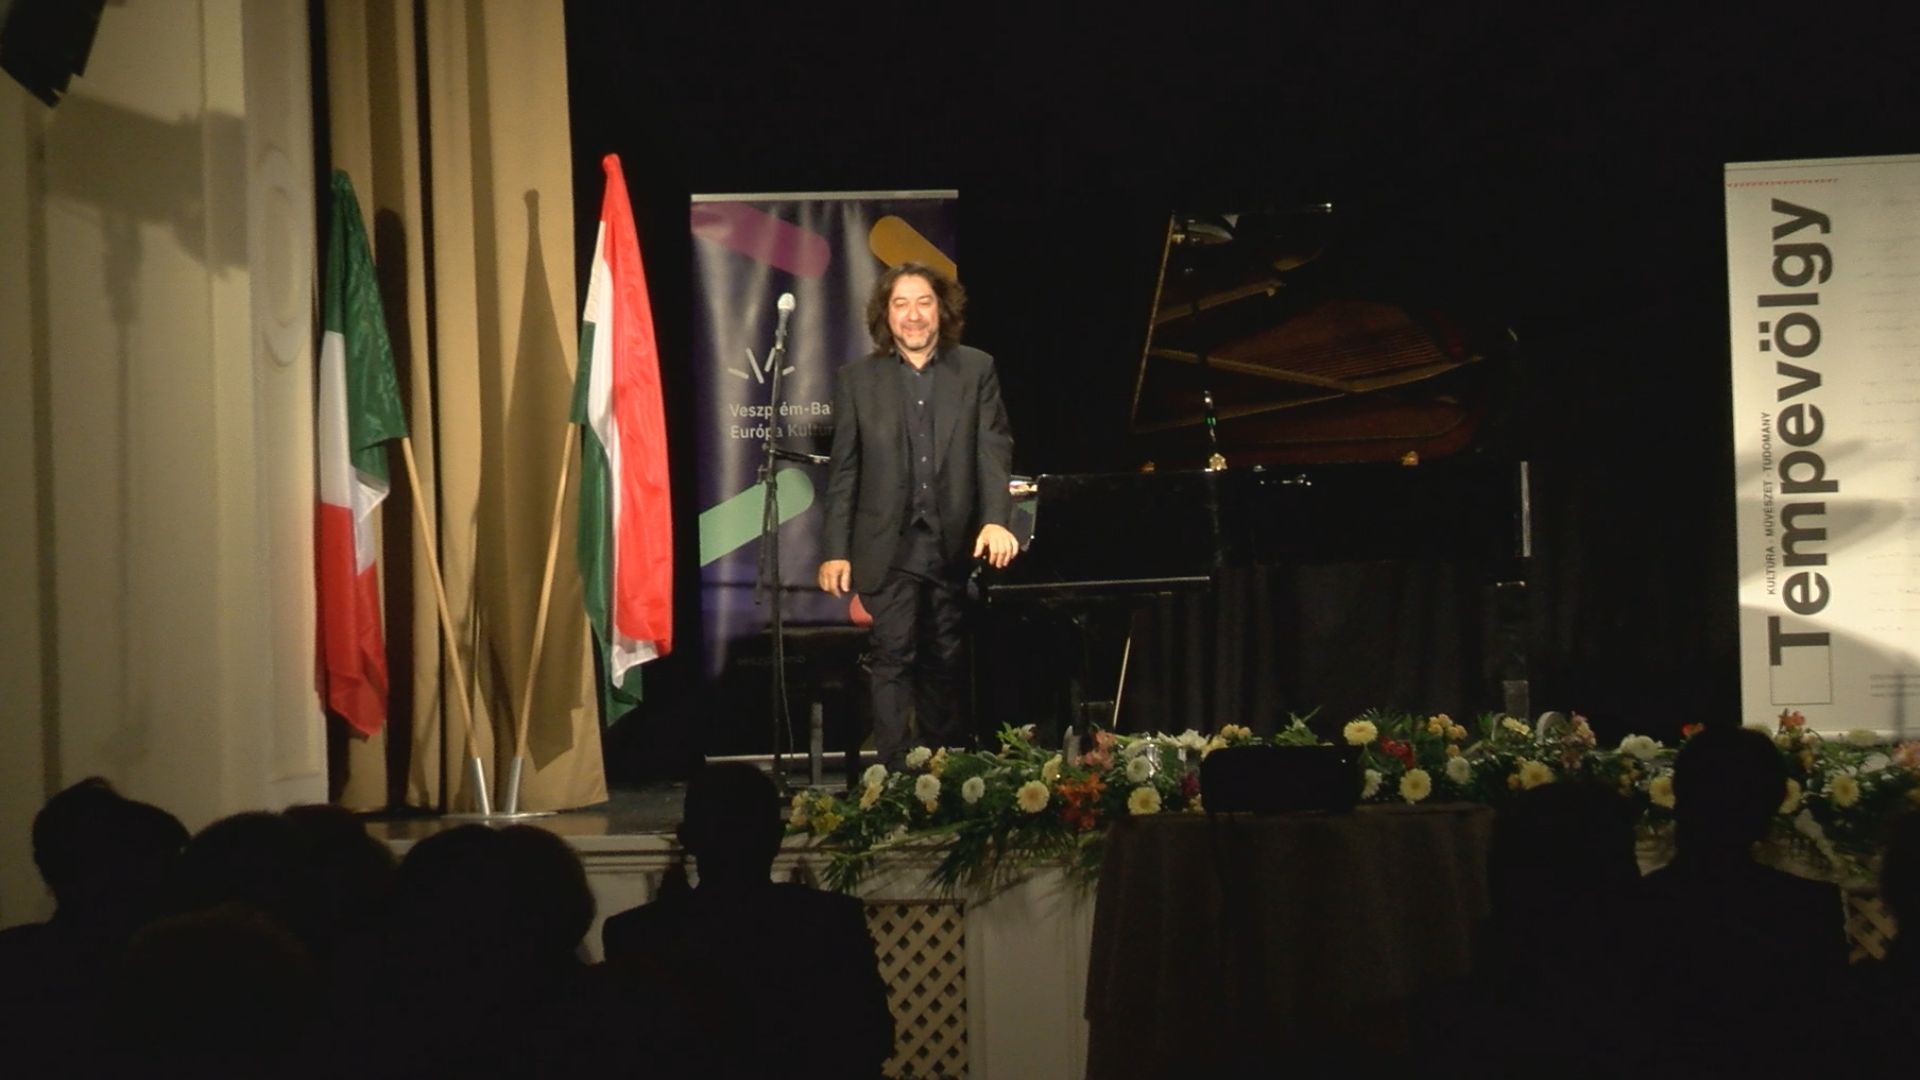 Zenekar zongorán, Mario Mariani koncertjén